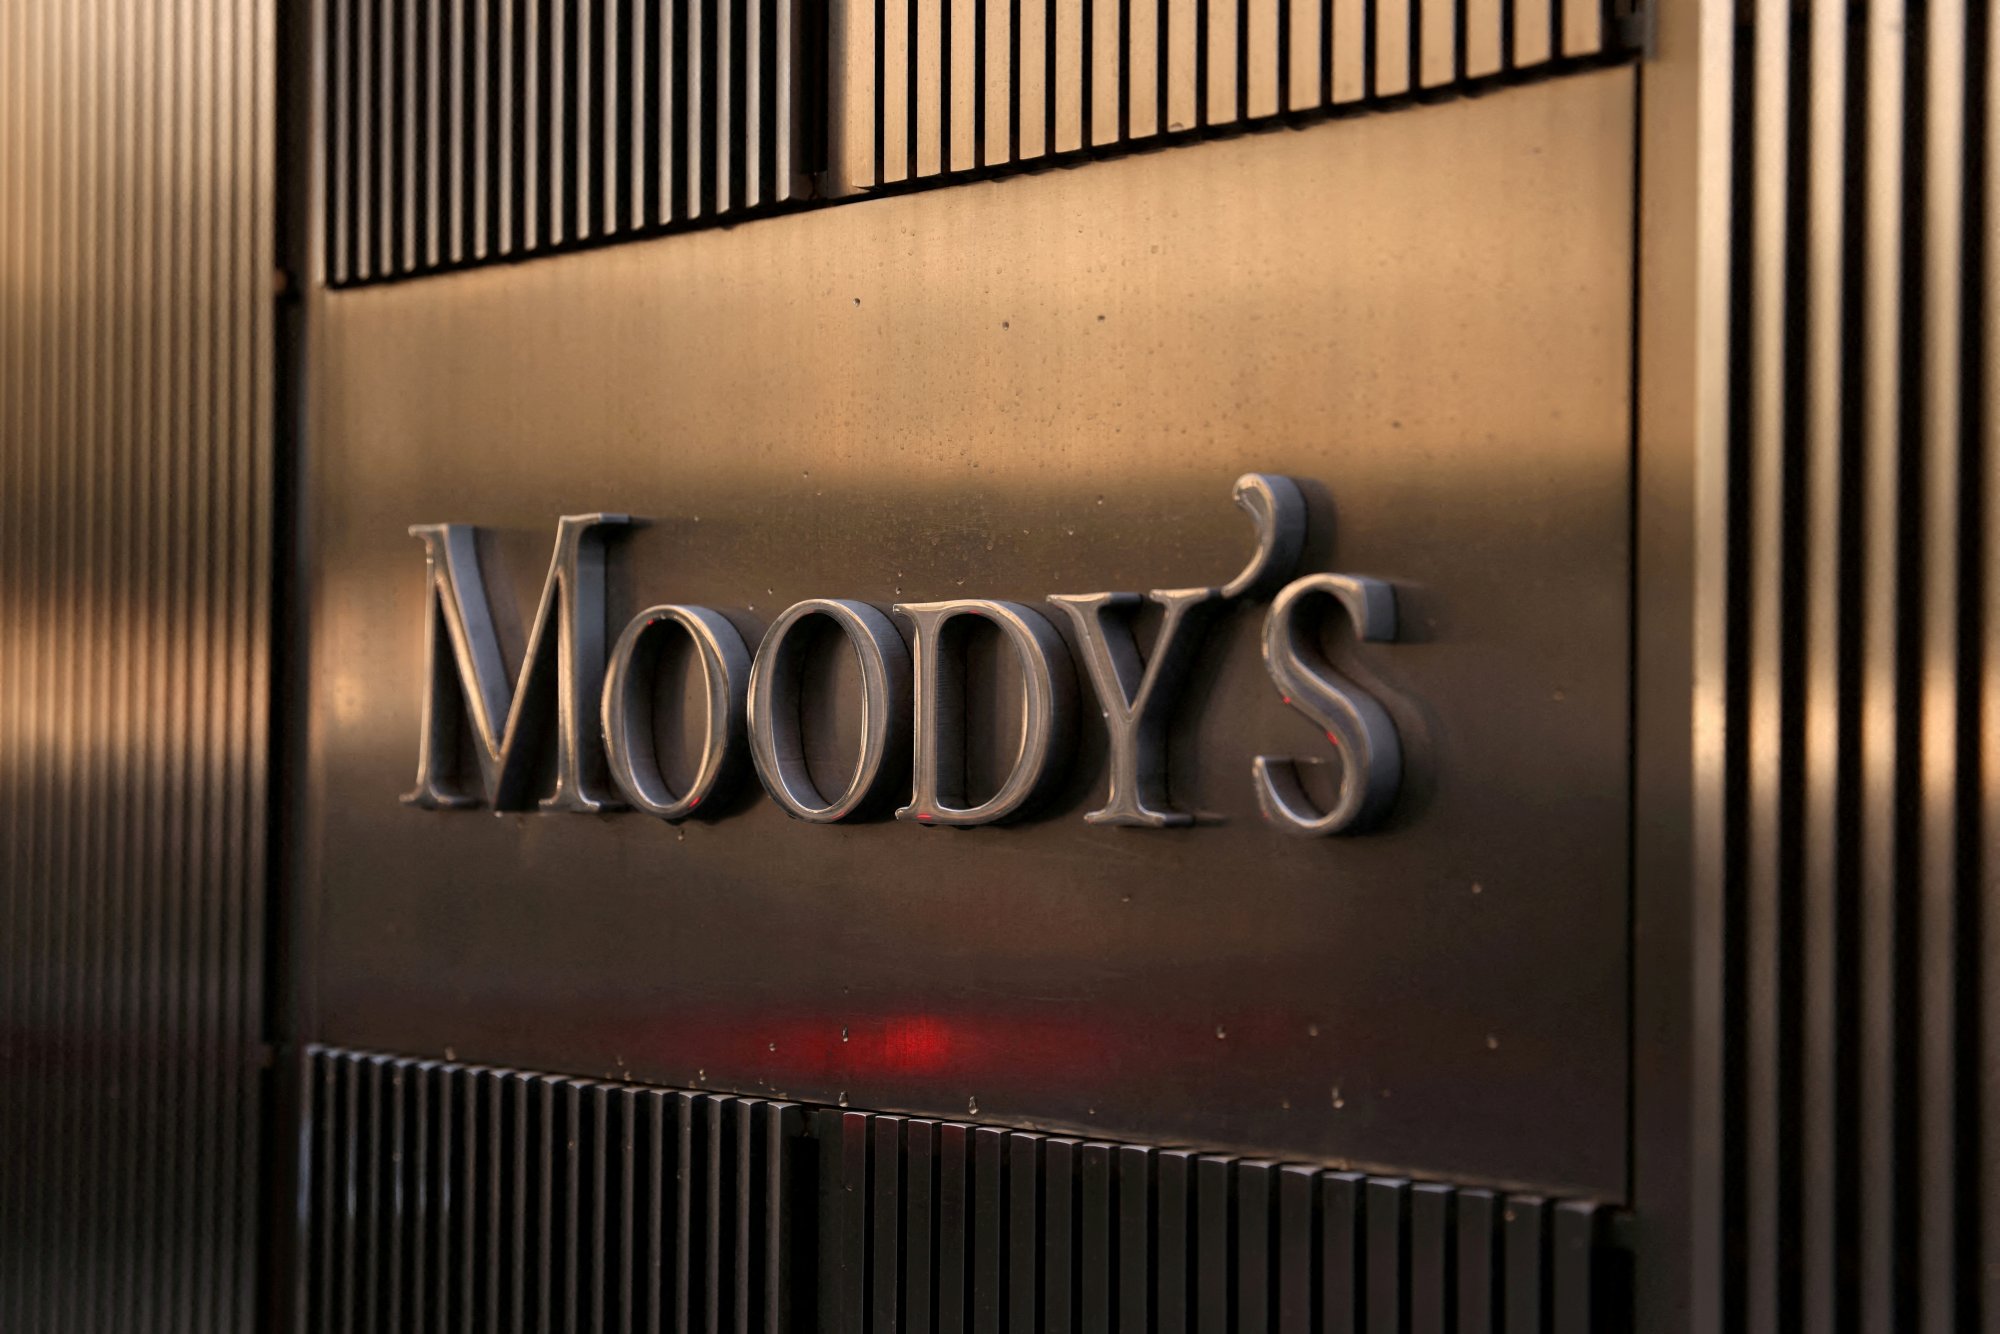 Moody’s: Υποβάθμισε την προοπτική του αξιόχρεου των ΗΠΑ - Εντονη αντίδραση του Λευκού Οίκου